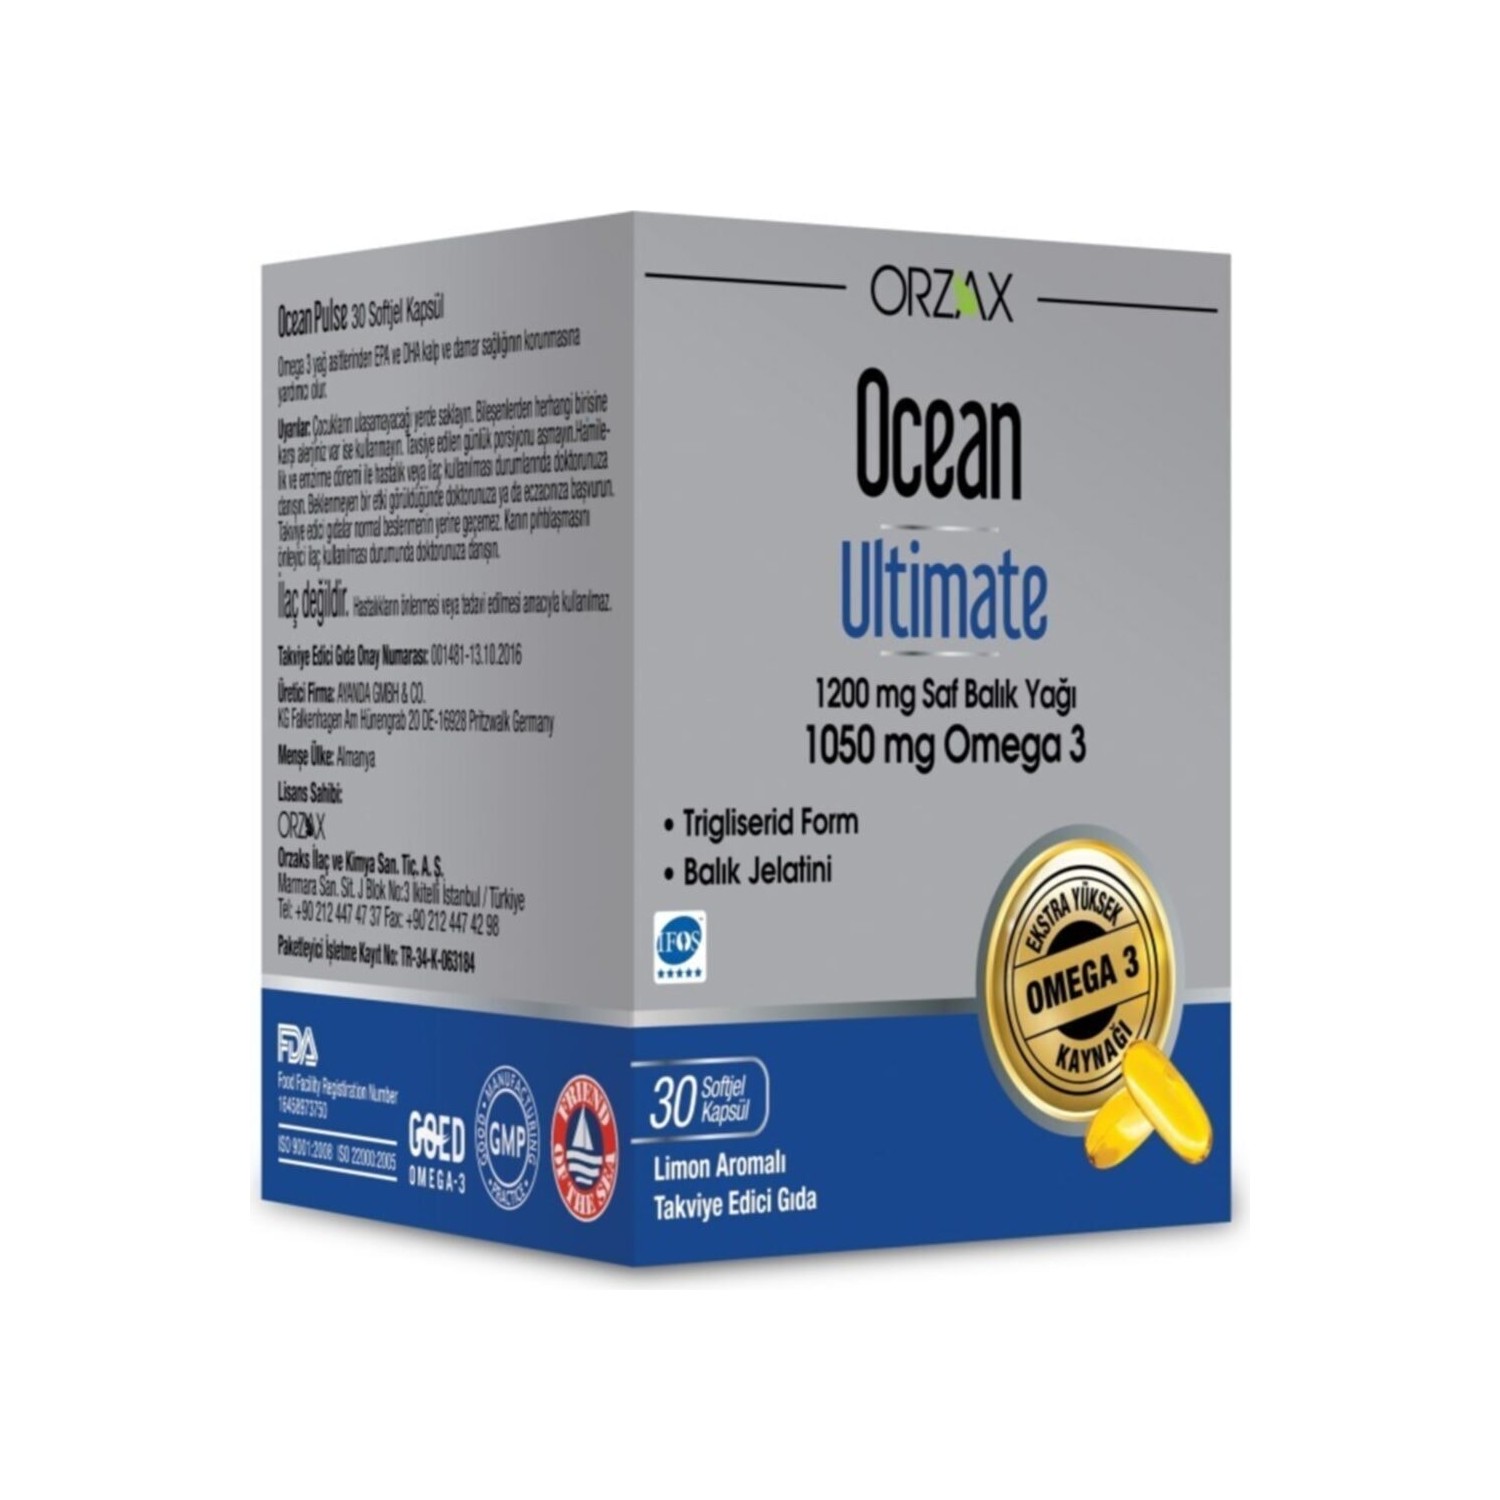 Пищевая добавка Ocean Supplement Ocean Ultimate 1200 мг, 30 капсул омега 3 ocean ultimate 1050 мг 2 упаковки по 30 капсул